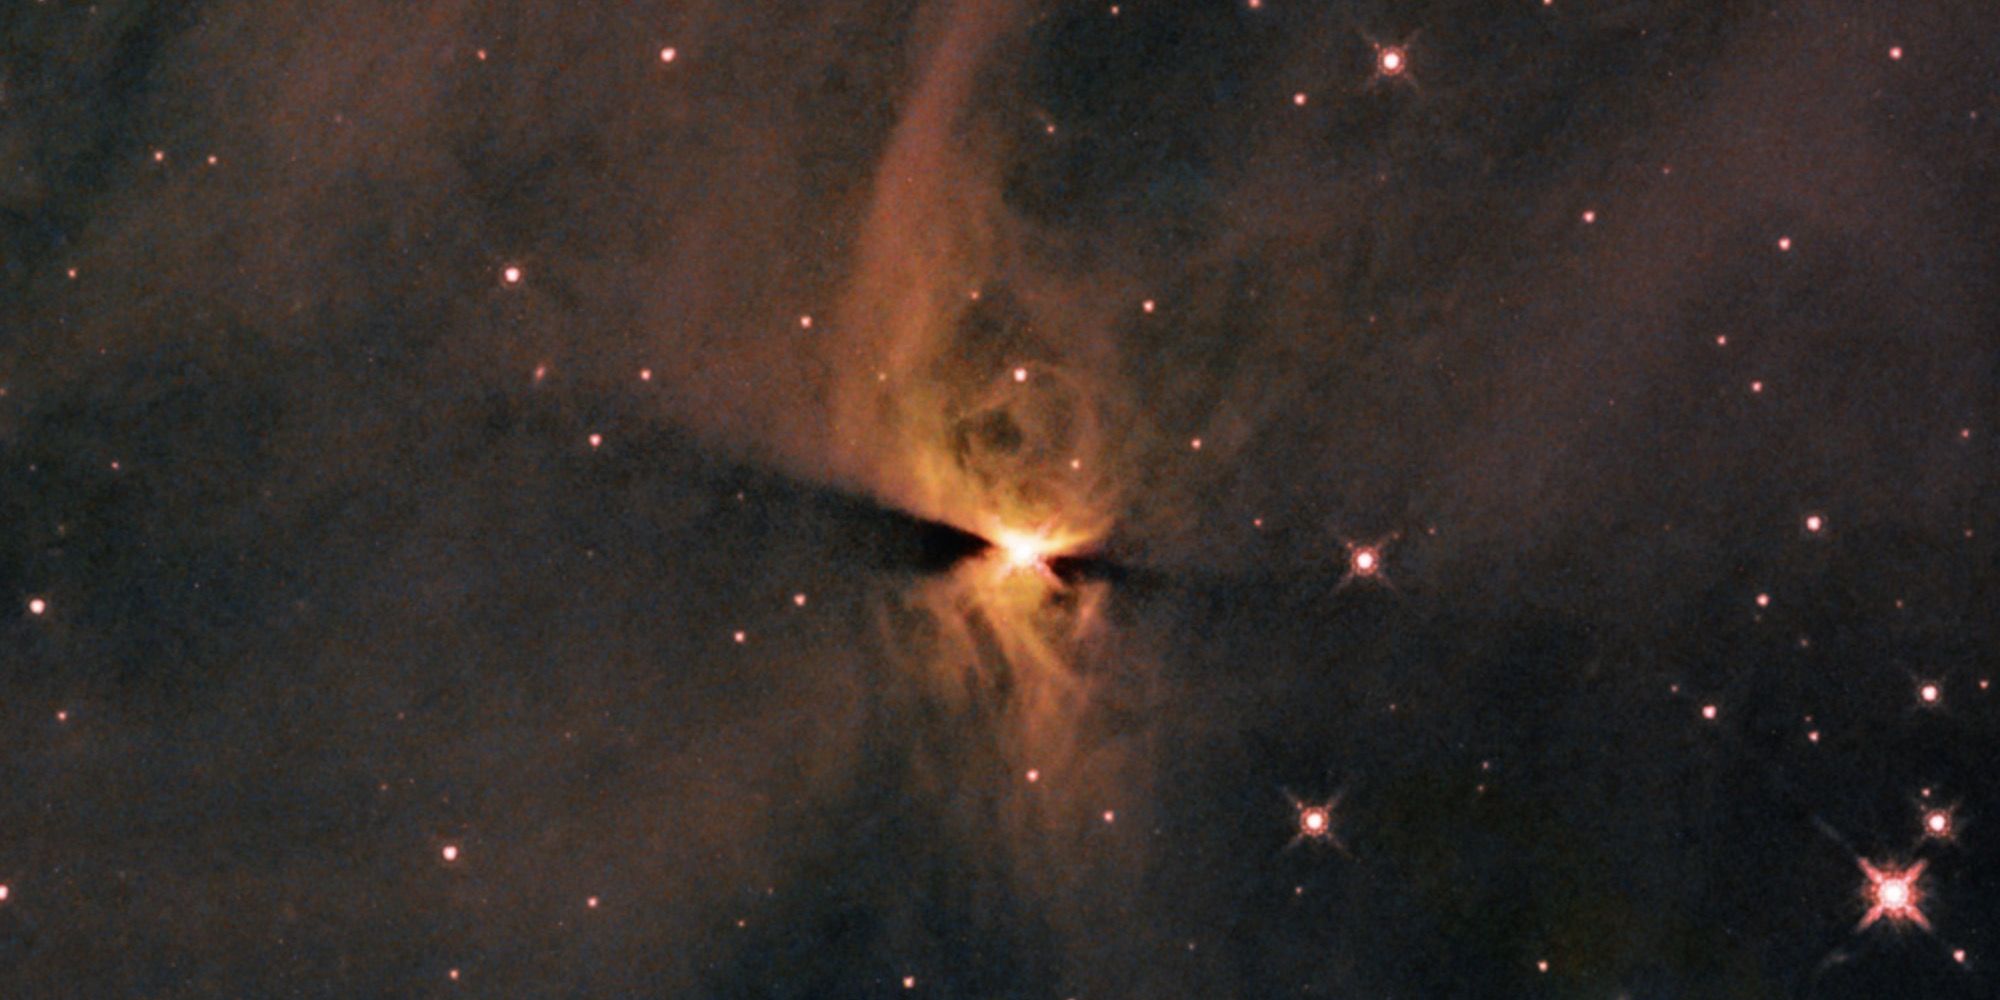 Hubble's sharp eye captures a protostar designated J1672835.29-763111.64 in the reflection nebula IC 2631.